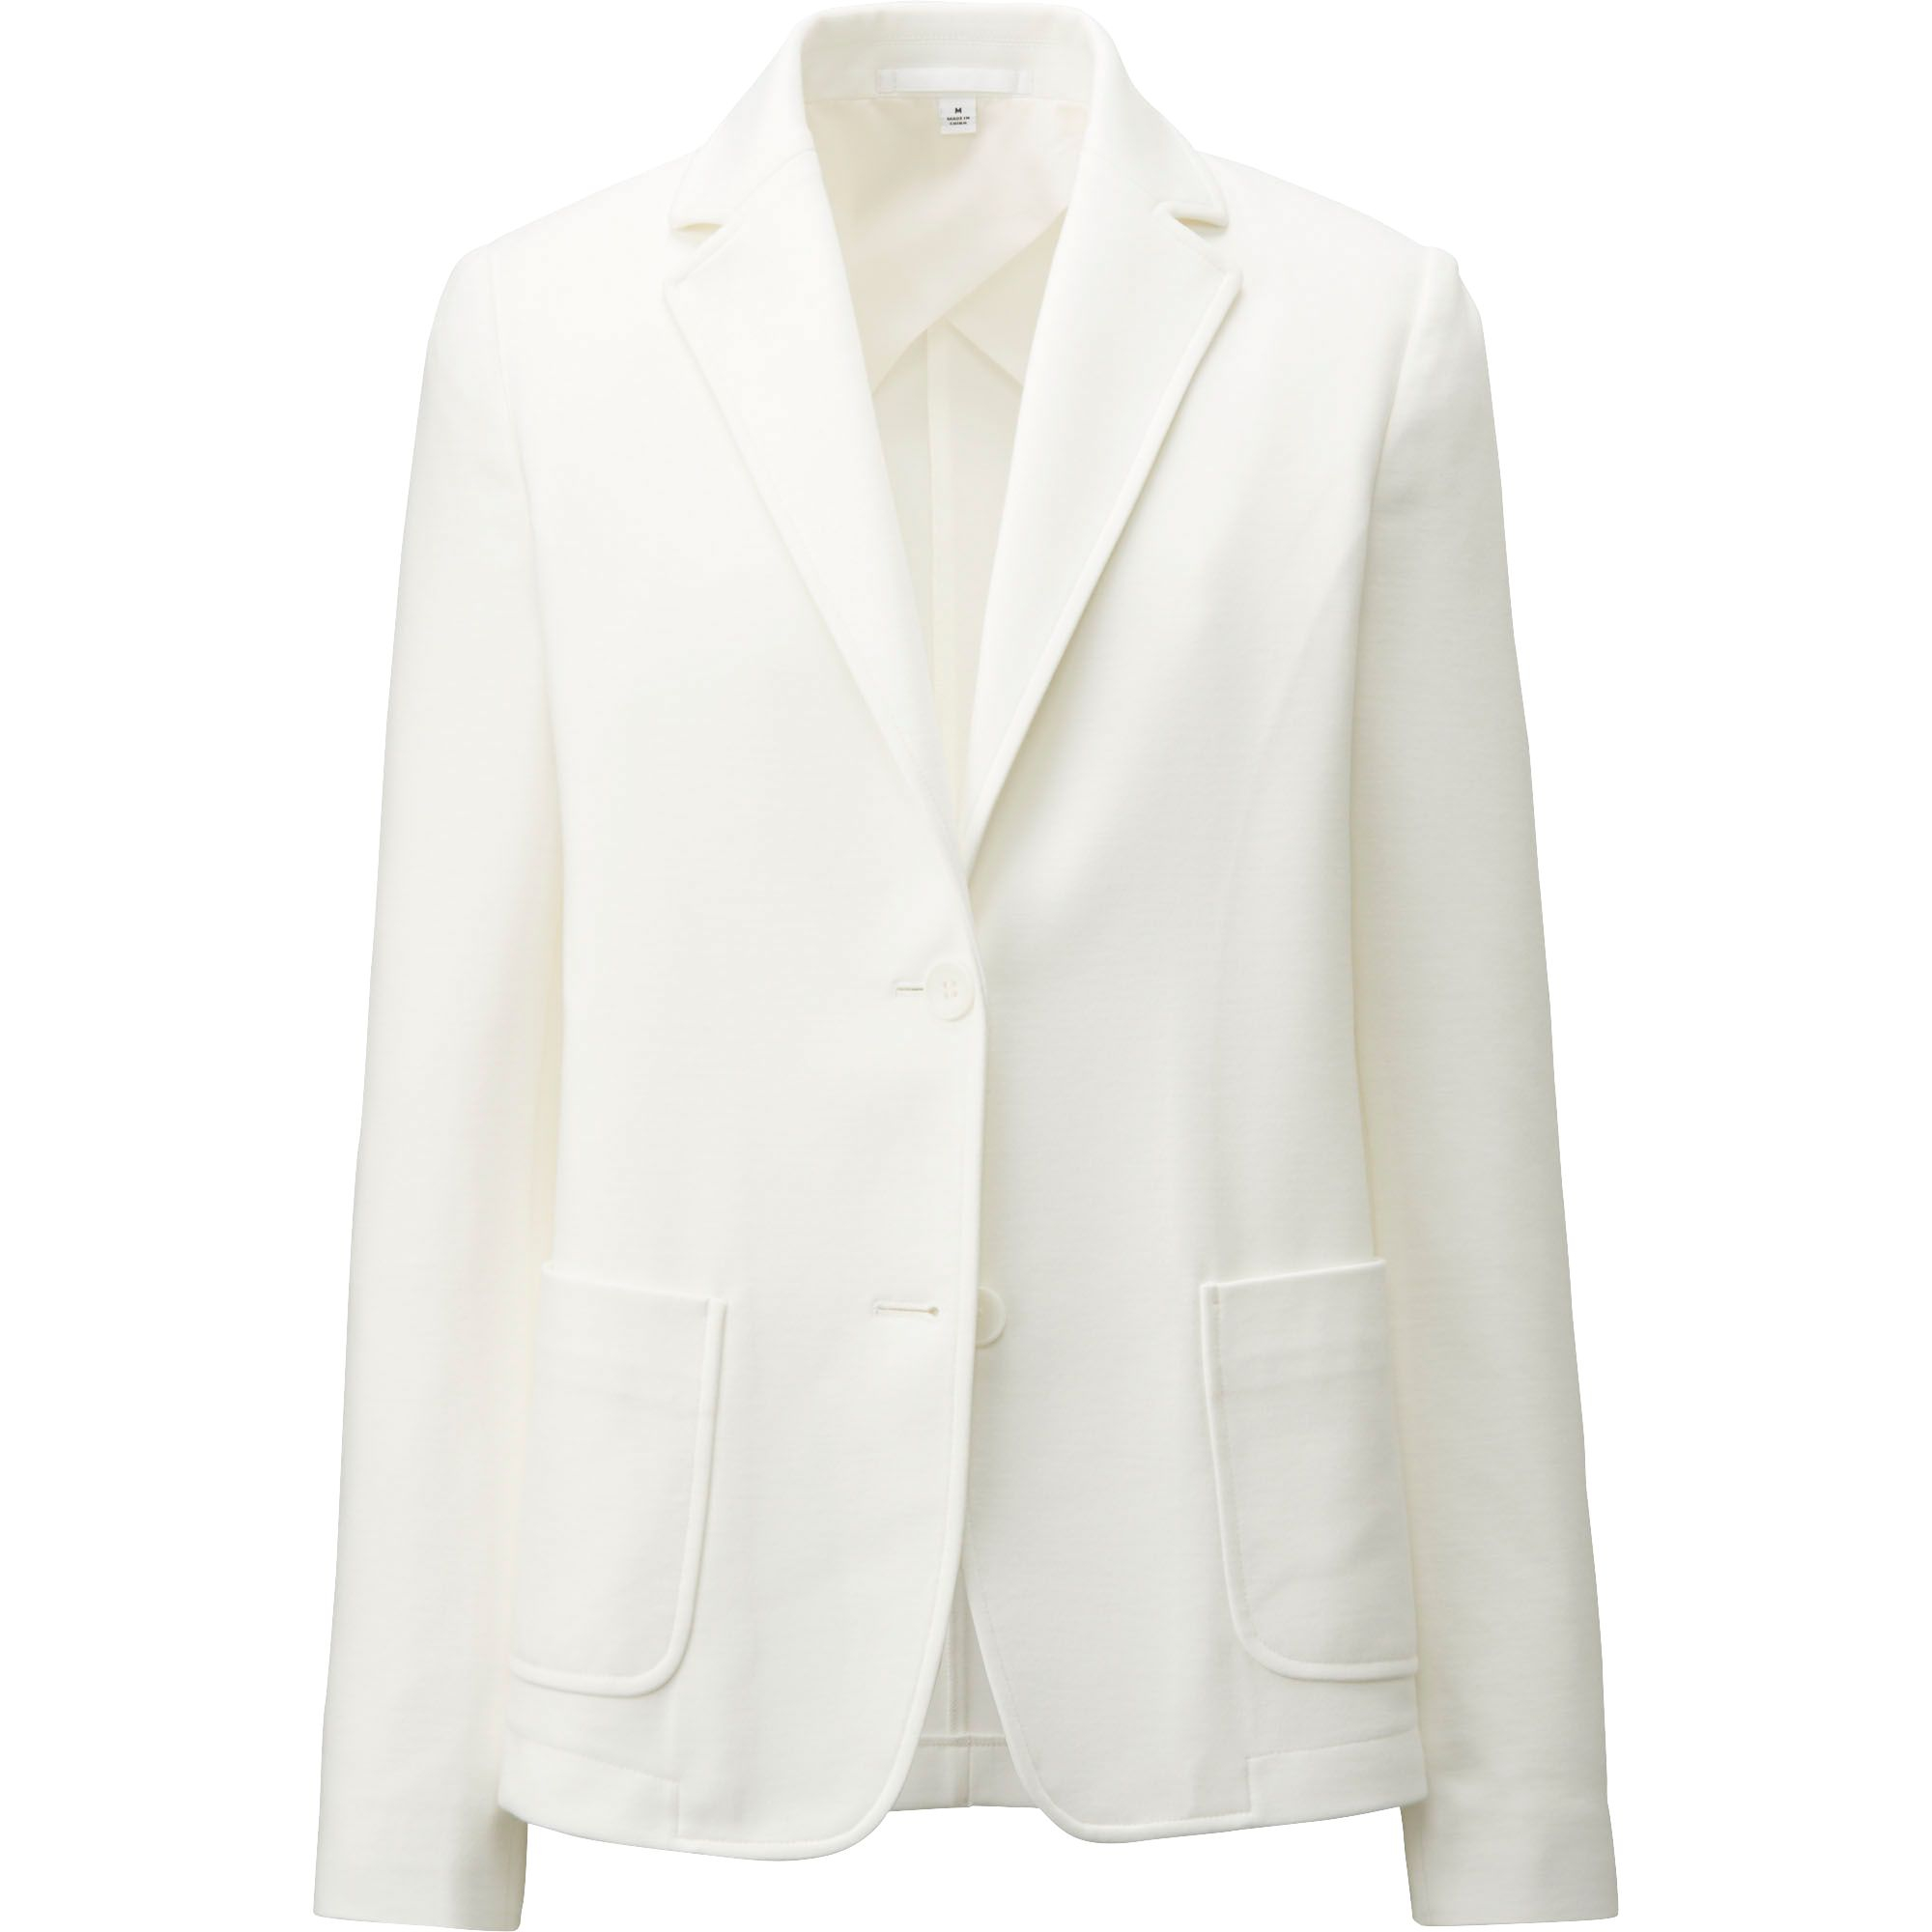 Uniqlo Women Soft Jersey Jacket in White (OFF WHITE)